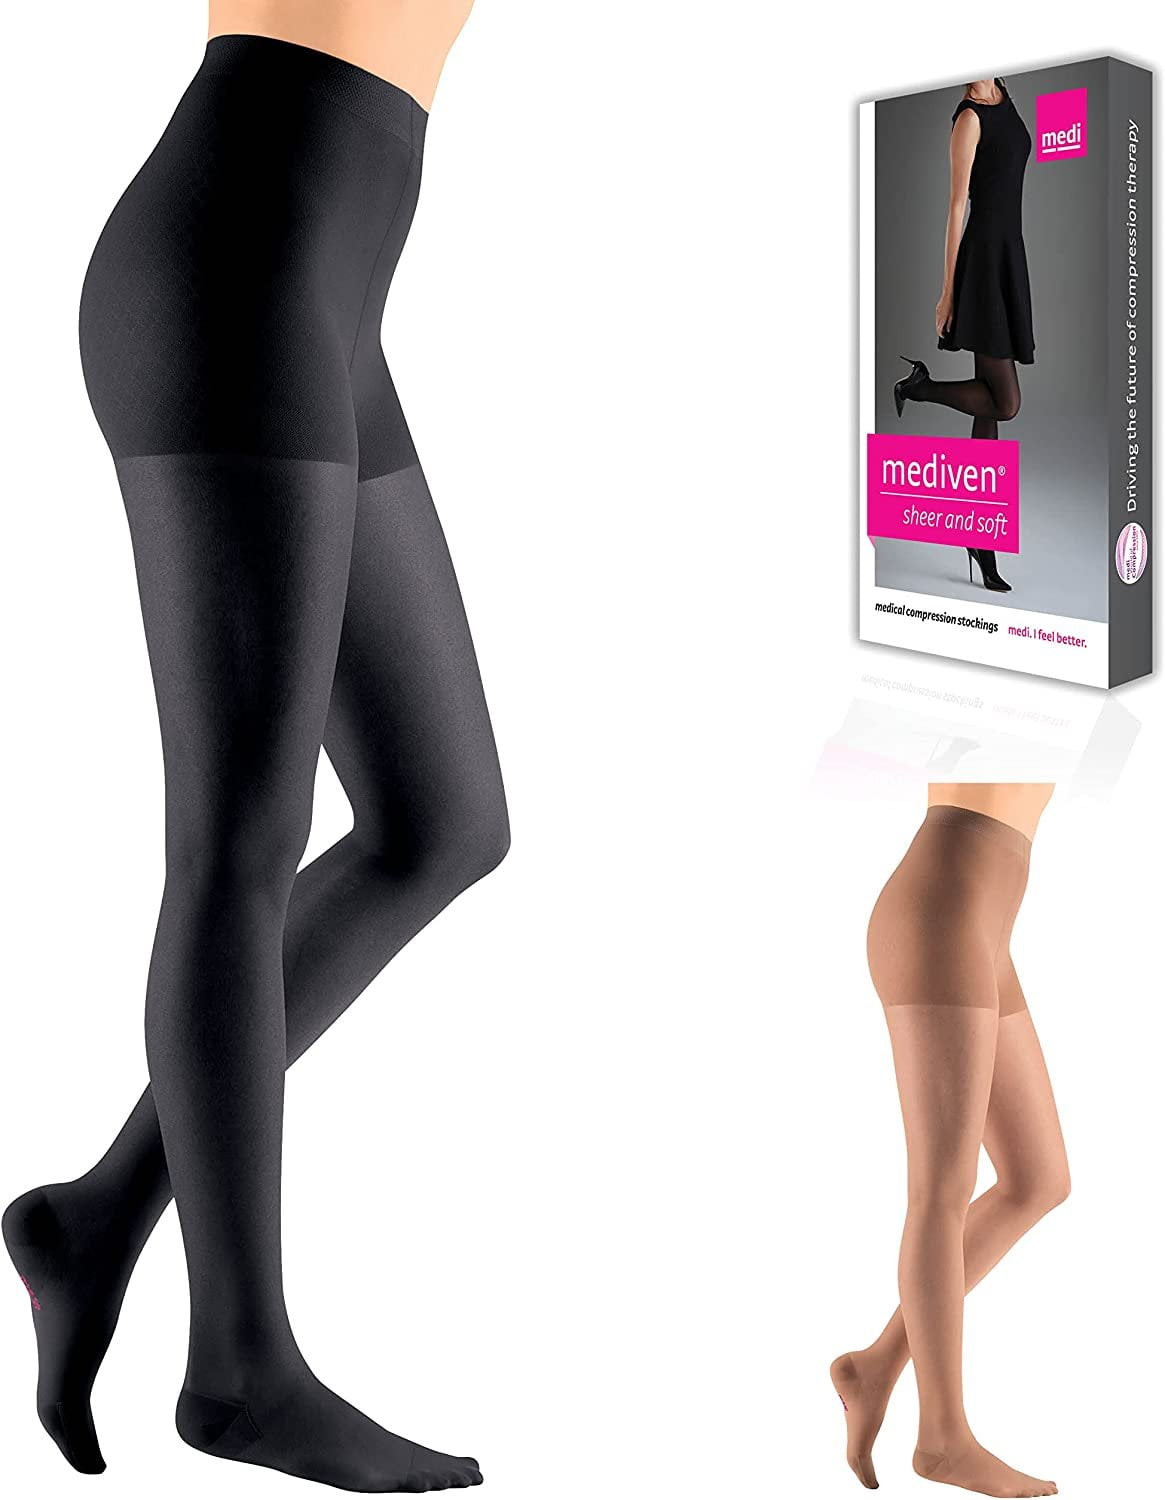 mediven sheer & soft for Women, 30-40 mmHg Panty Closed Toe Compression  Stockings, Ebony, IV-Petite 